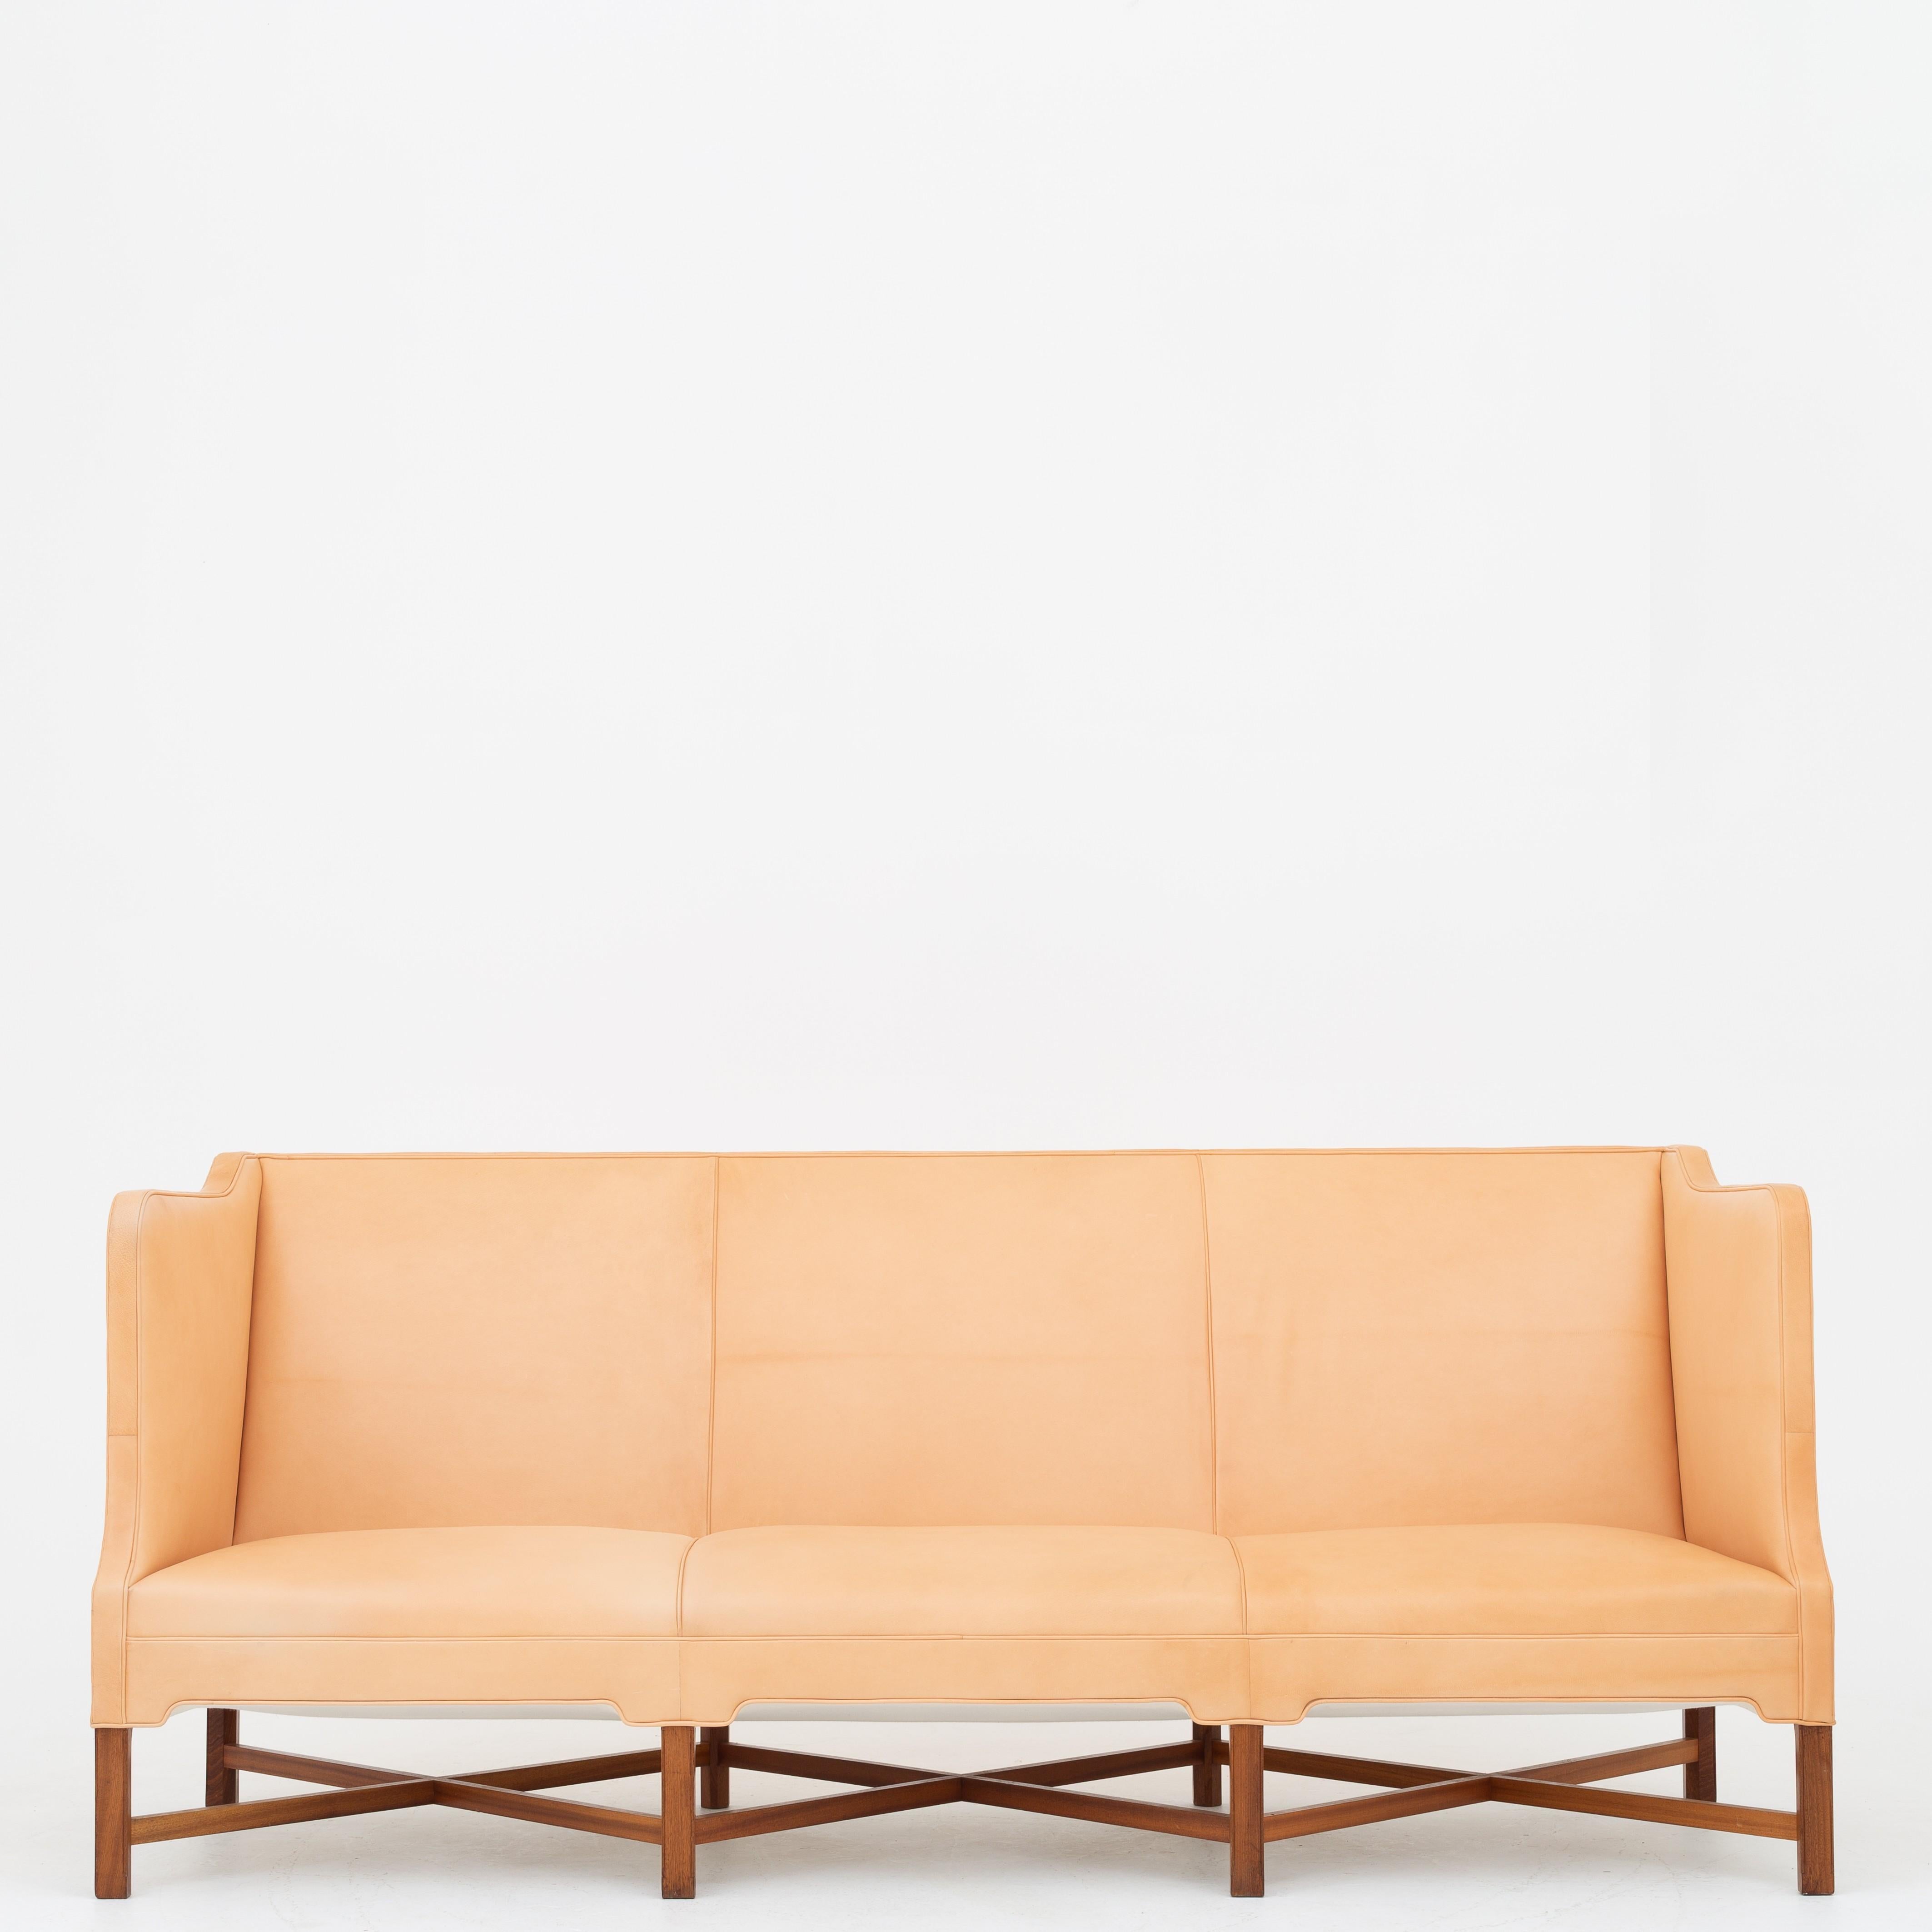 KK 4118 3-Seat Sofa in Niger Leather by Kaare Klint 1